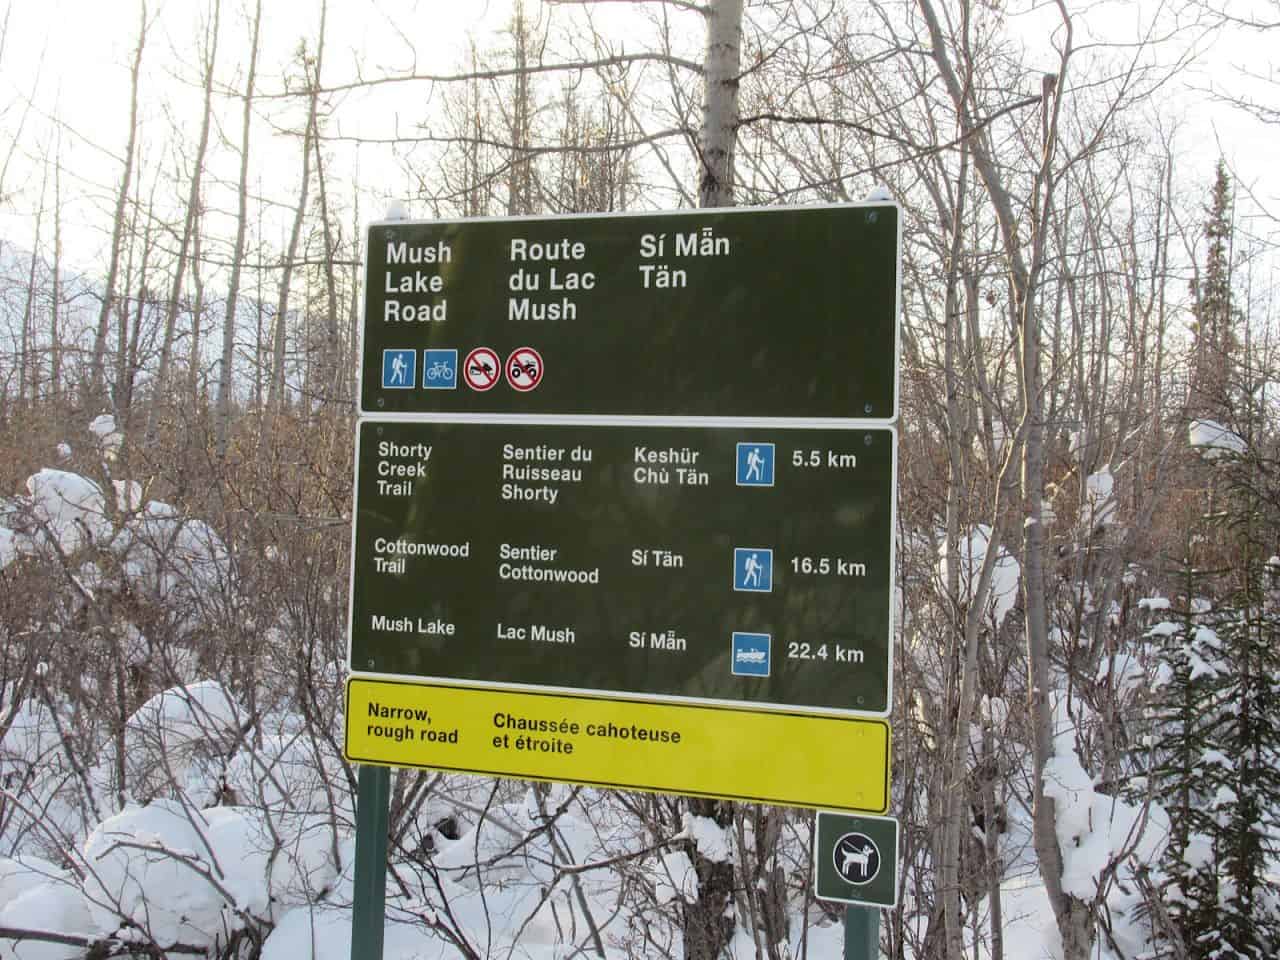 Trail sign for Mush Lake Road.